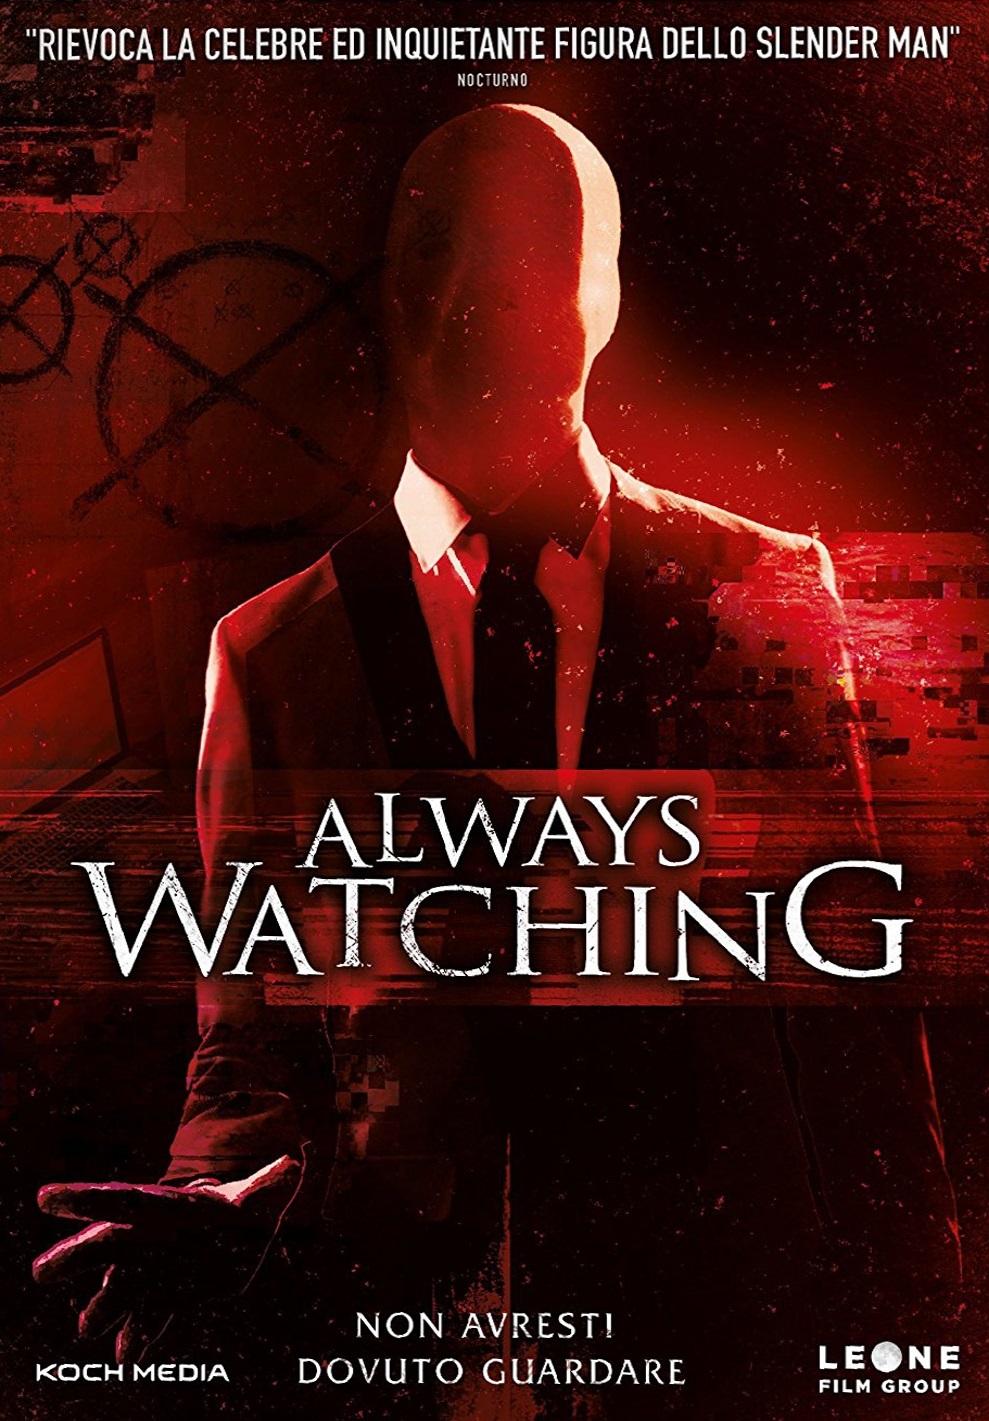 Always Watching [HD] (2015)